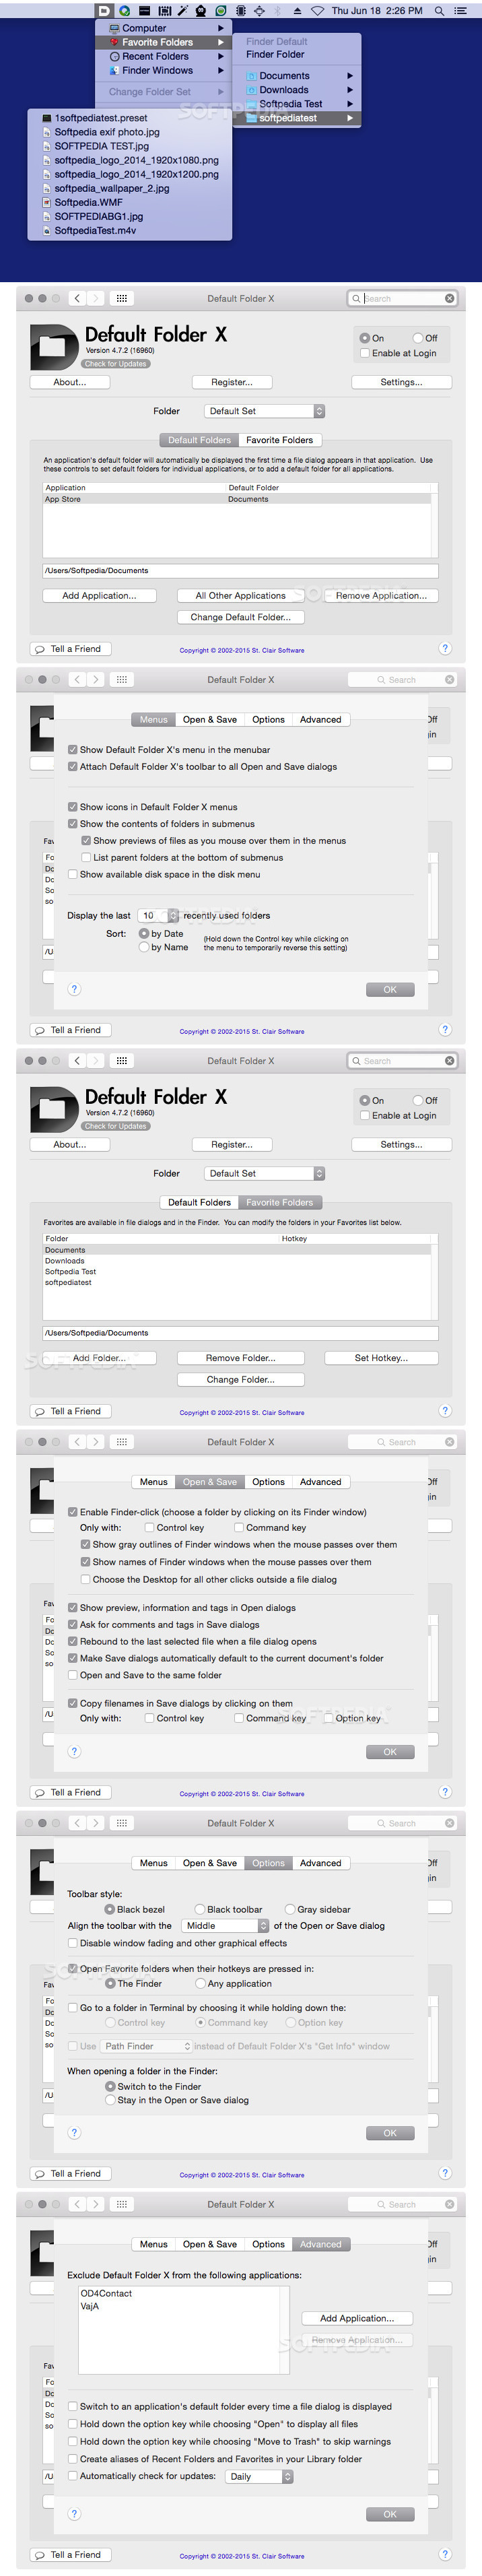 default folder x wont open